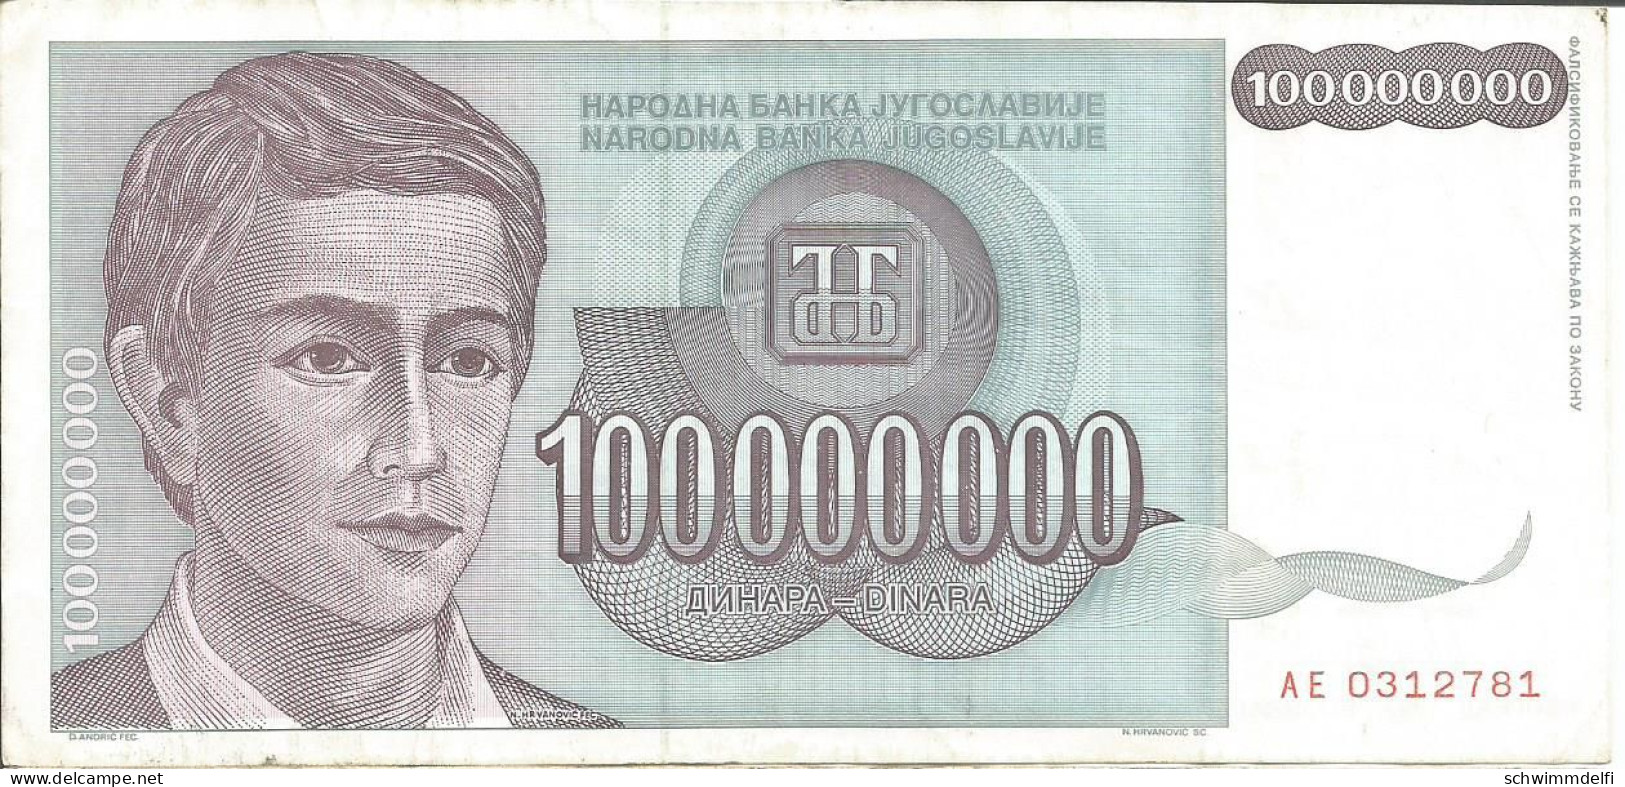 JUGOLAWIEN - YUGOSLAVIA - 100.000.000 DINARA 1993 - EBC - SEHR SCHON - VERY FINE - Yougoslavie